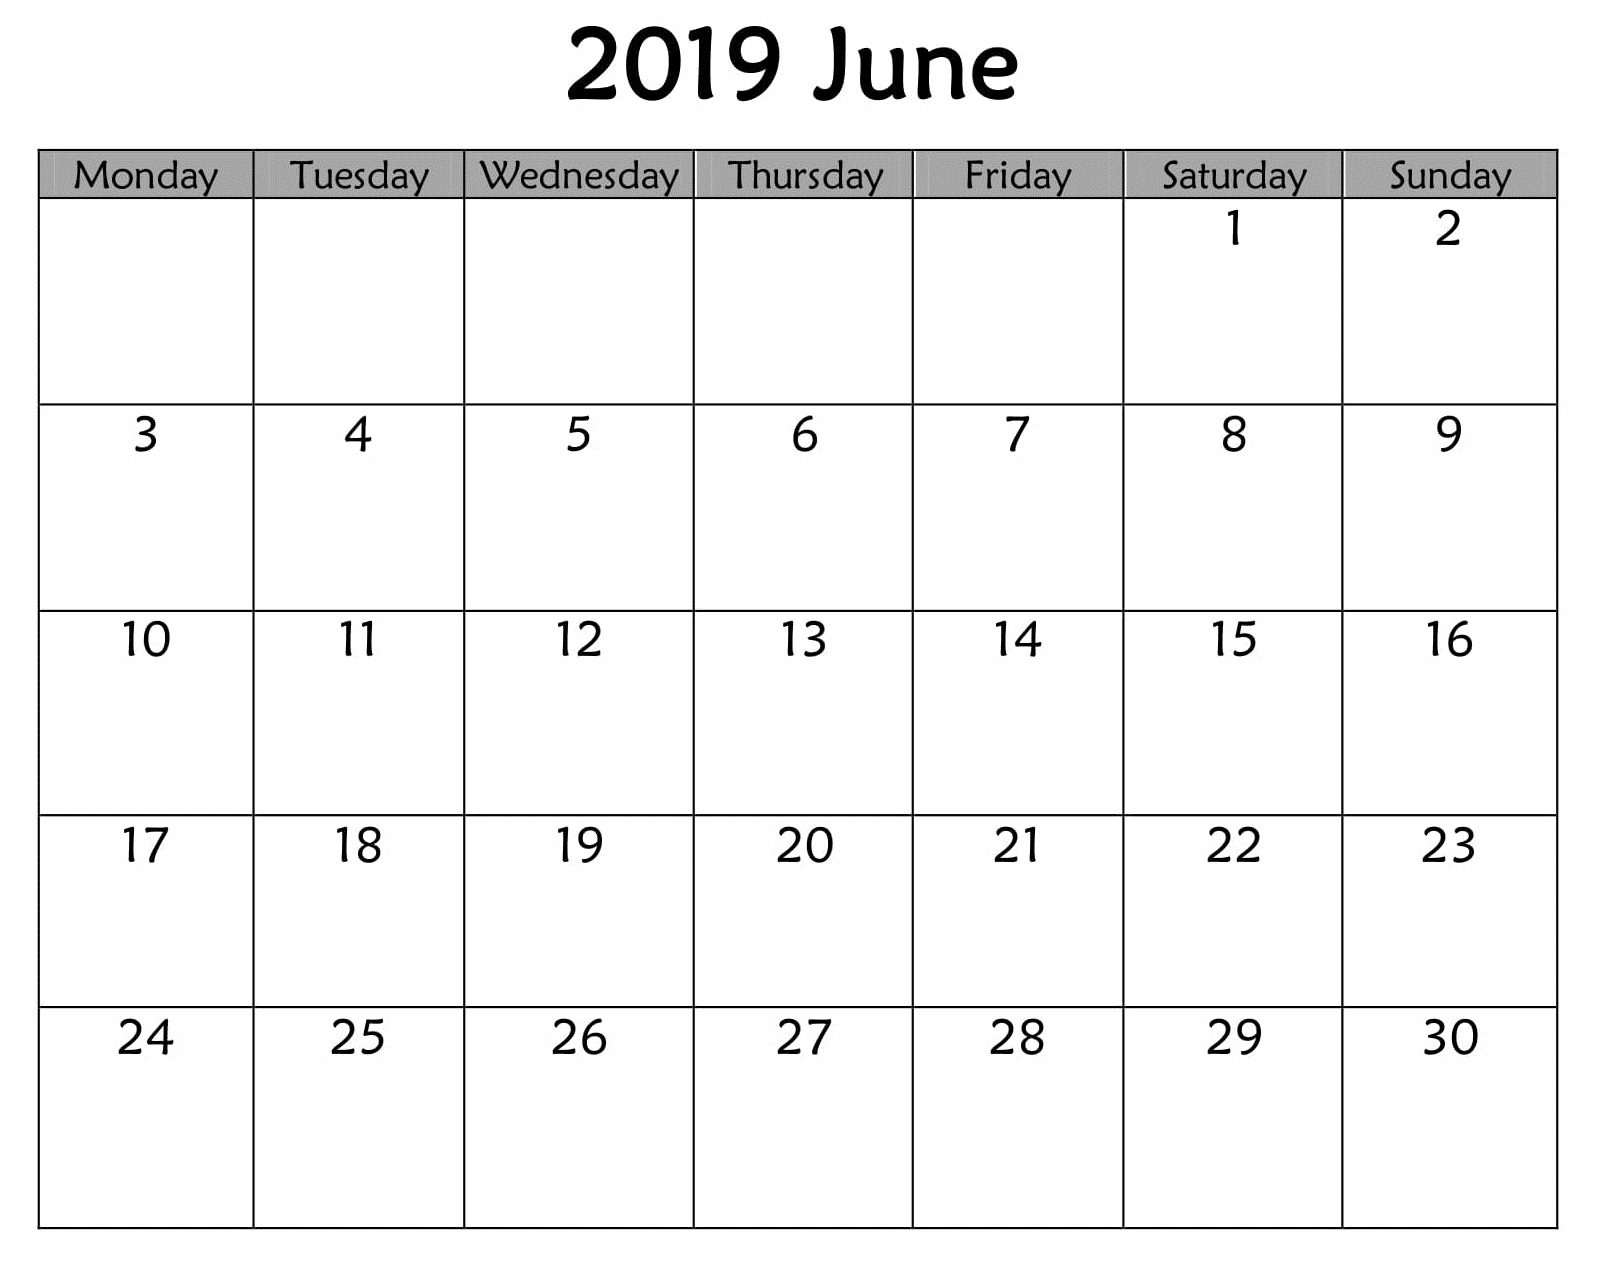 June 2019 Monthly Calendar Template